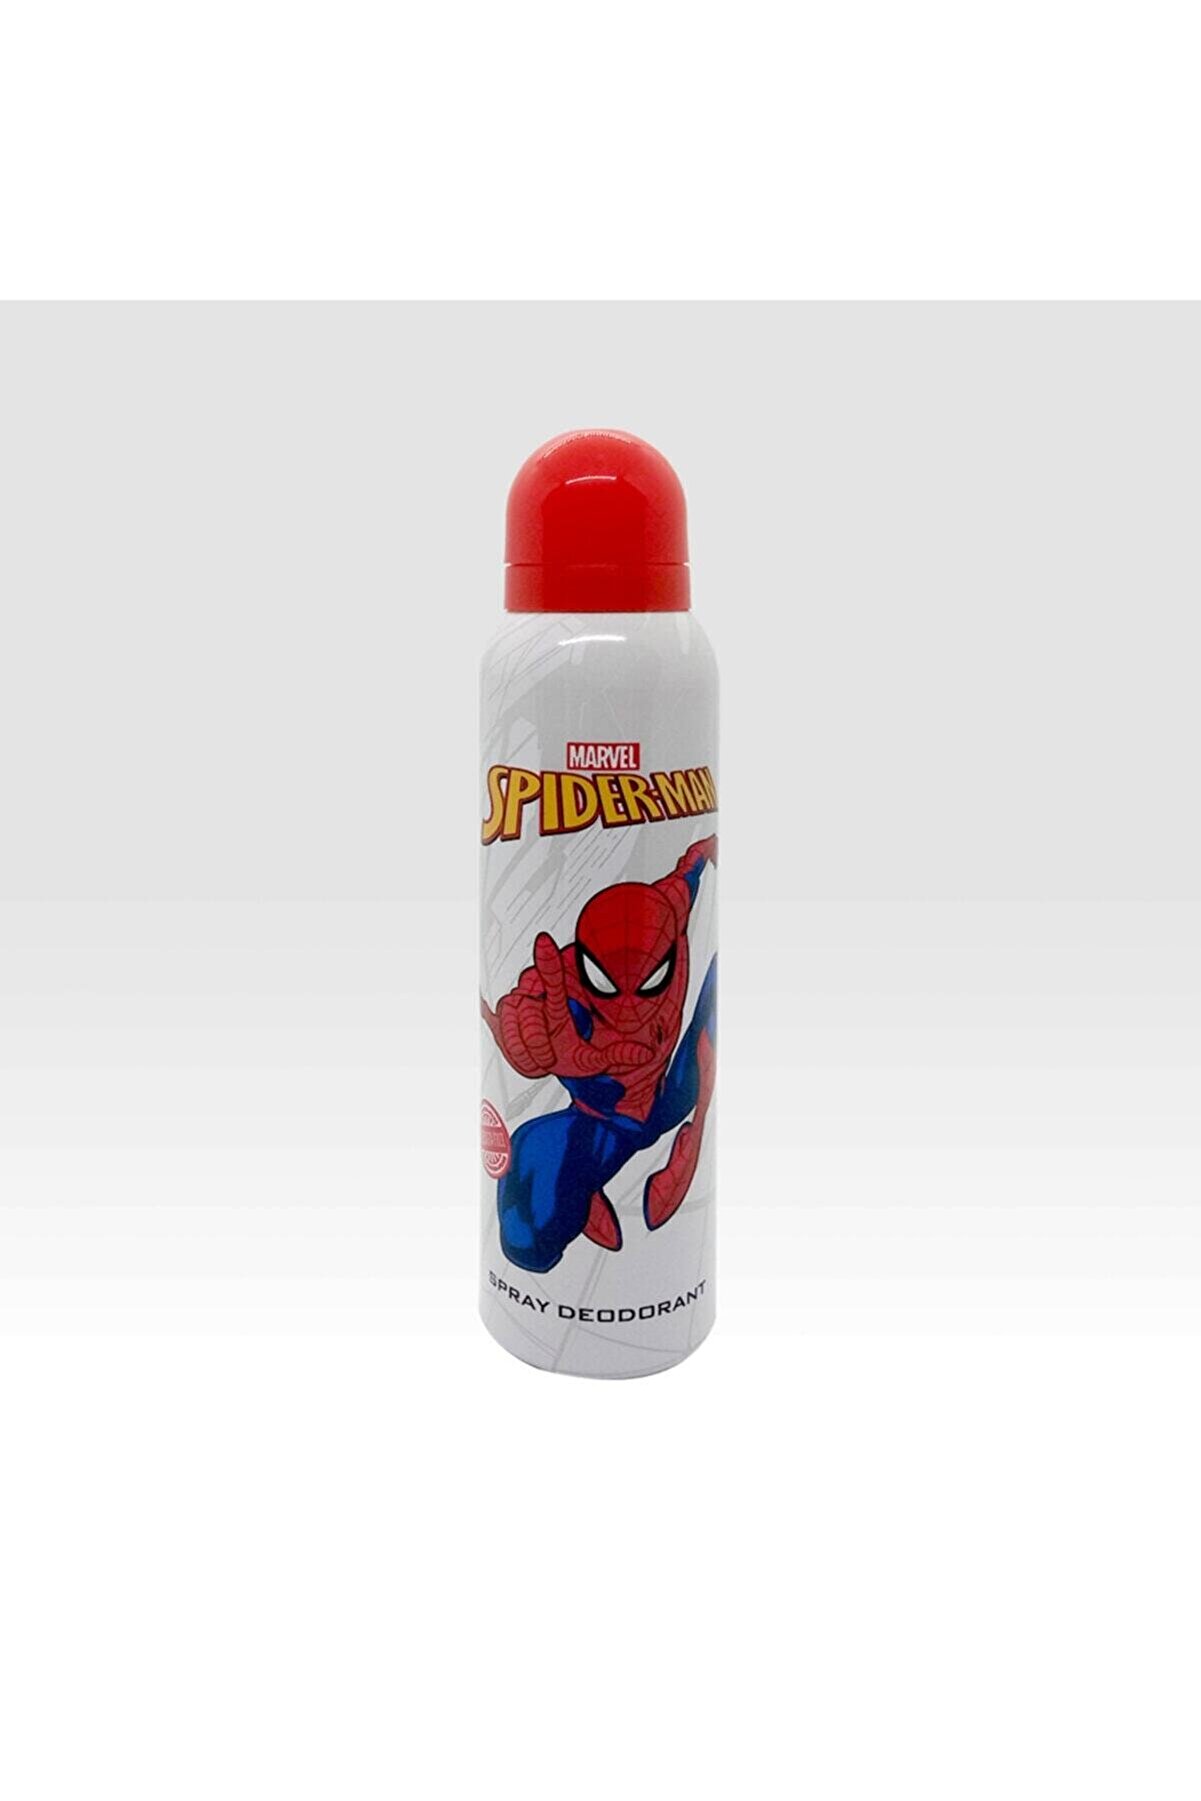 MARVEL Spider-man 150ml Spray Deodorant